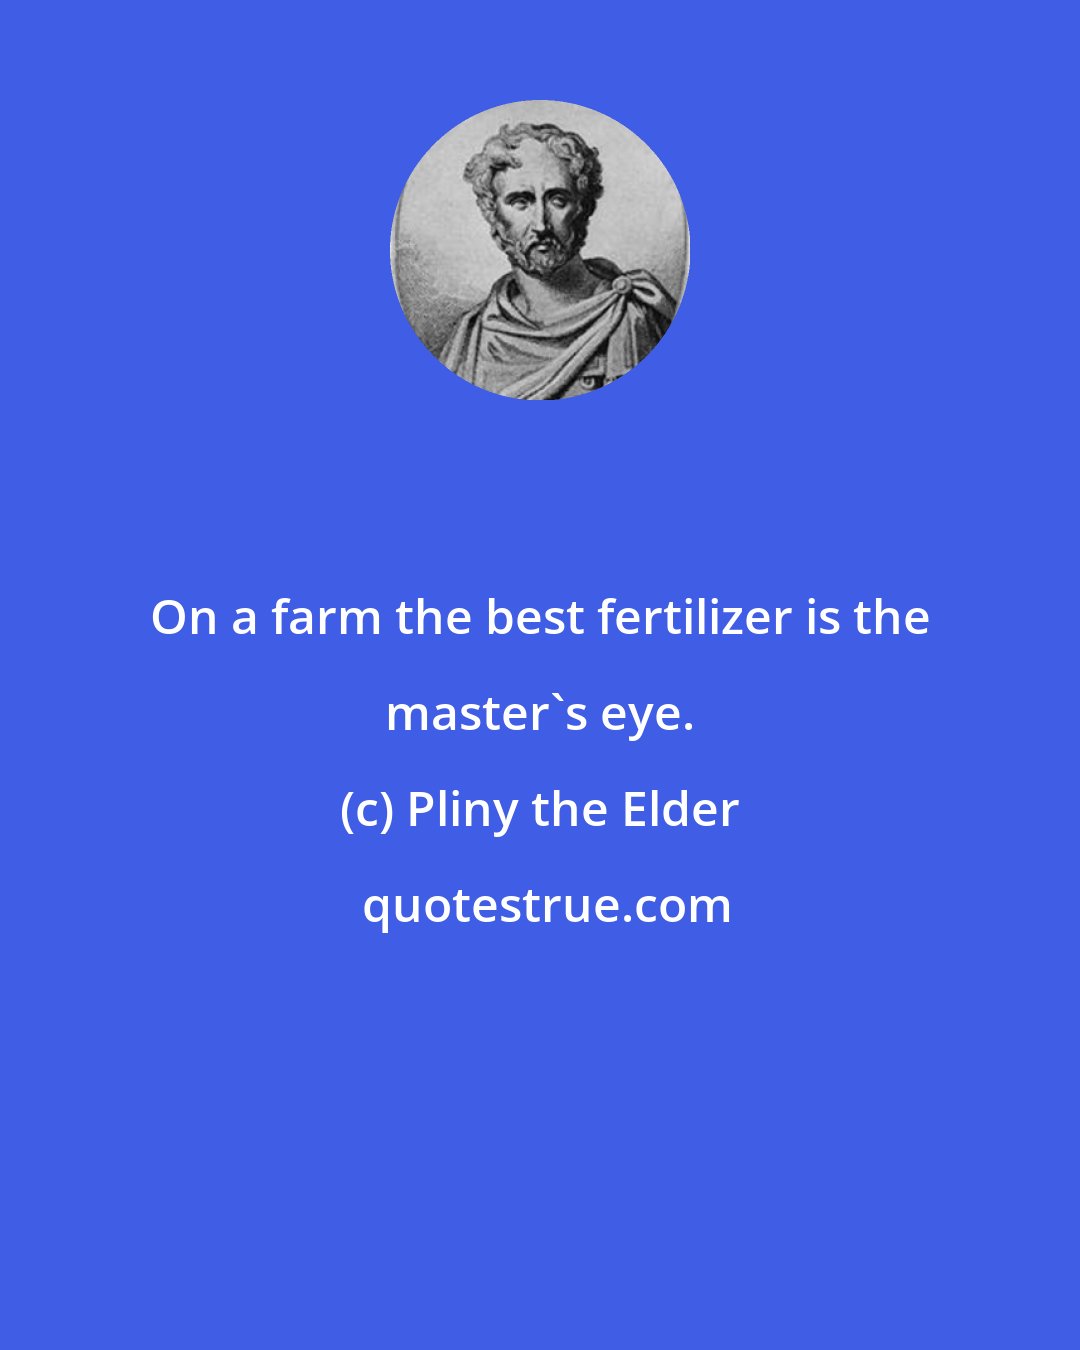 Pliny the Elder: On a farm the best fertilizer is the master's eye.